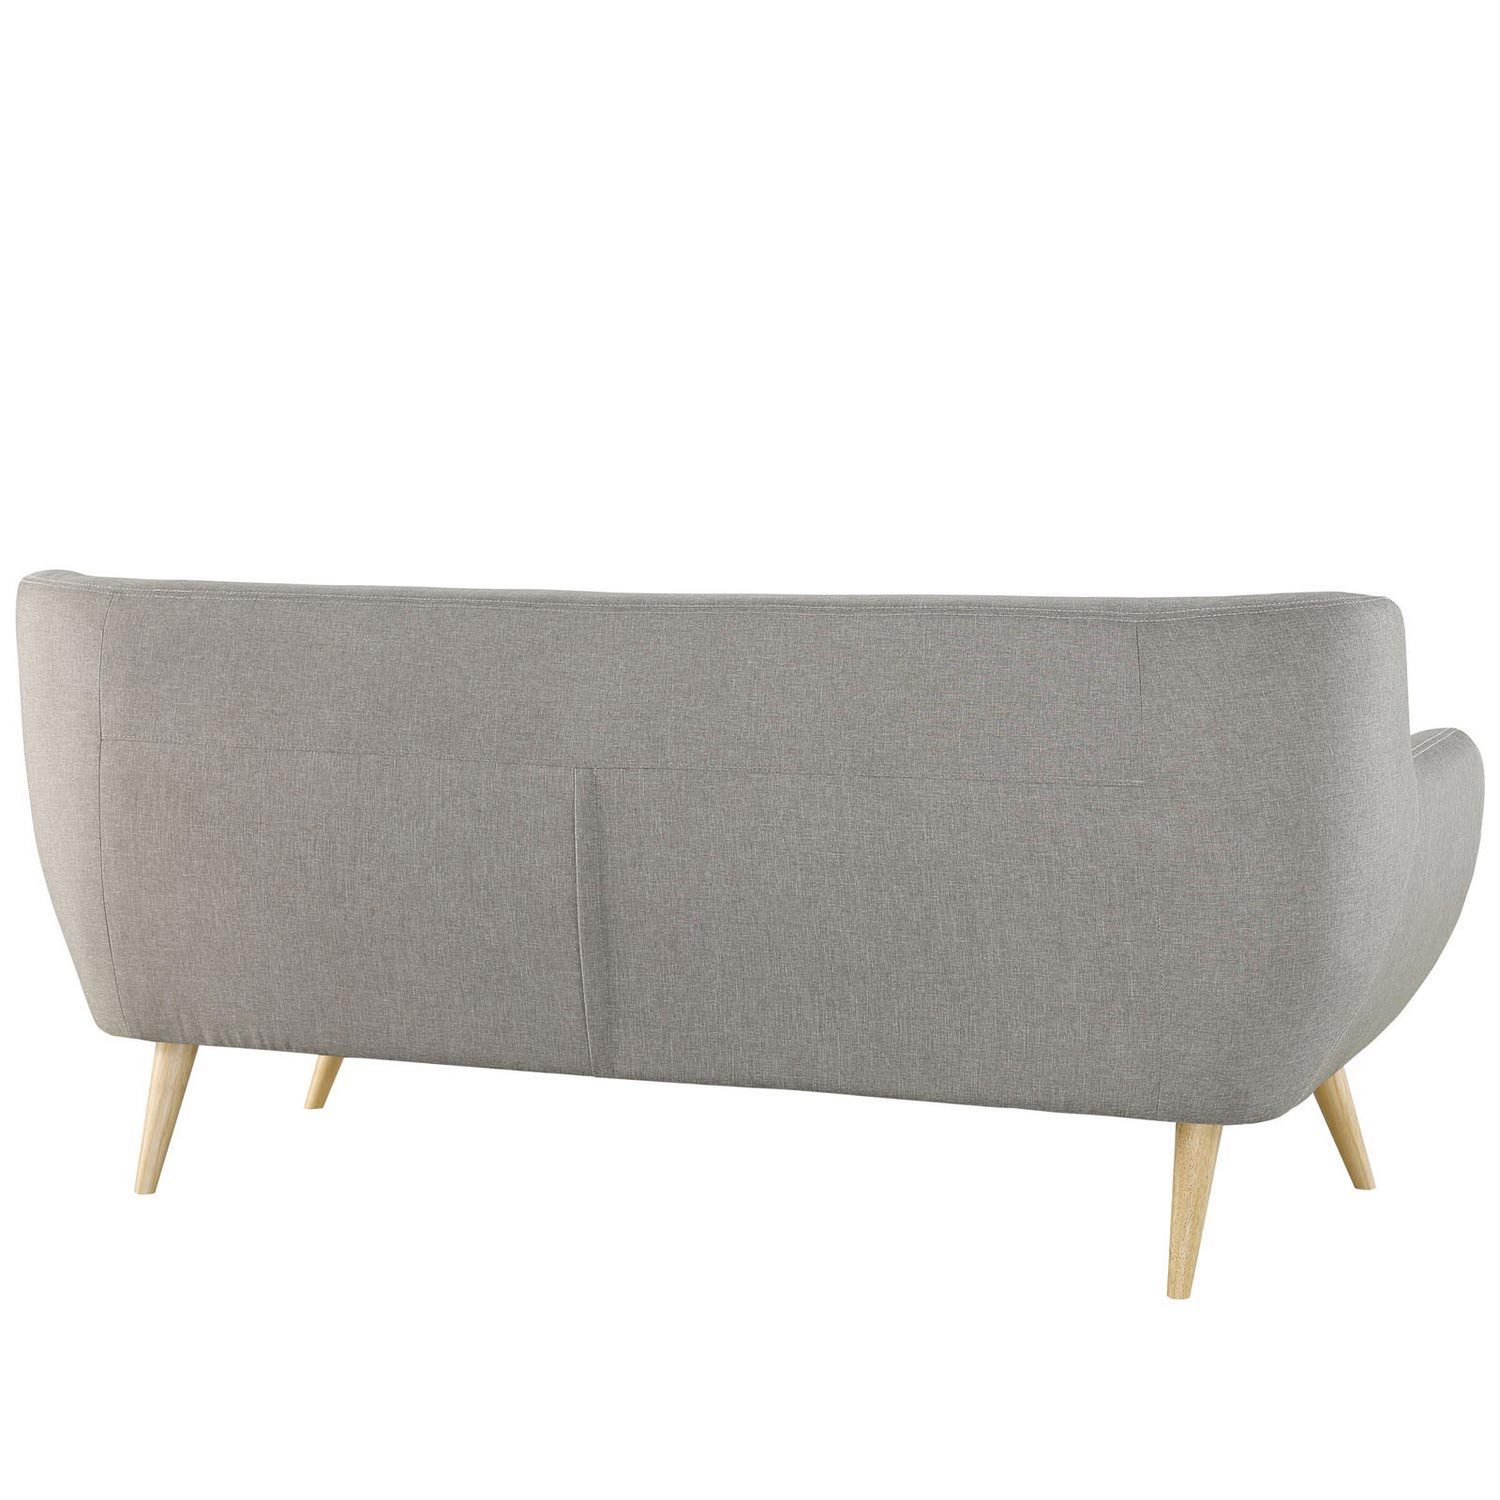 Modway Remark Sofa - Light Gray